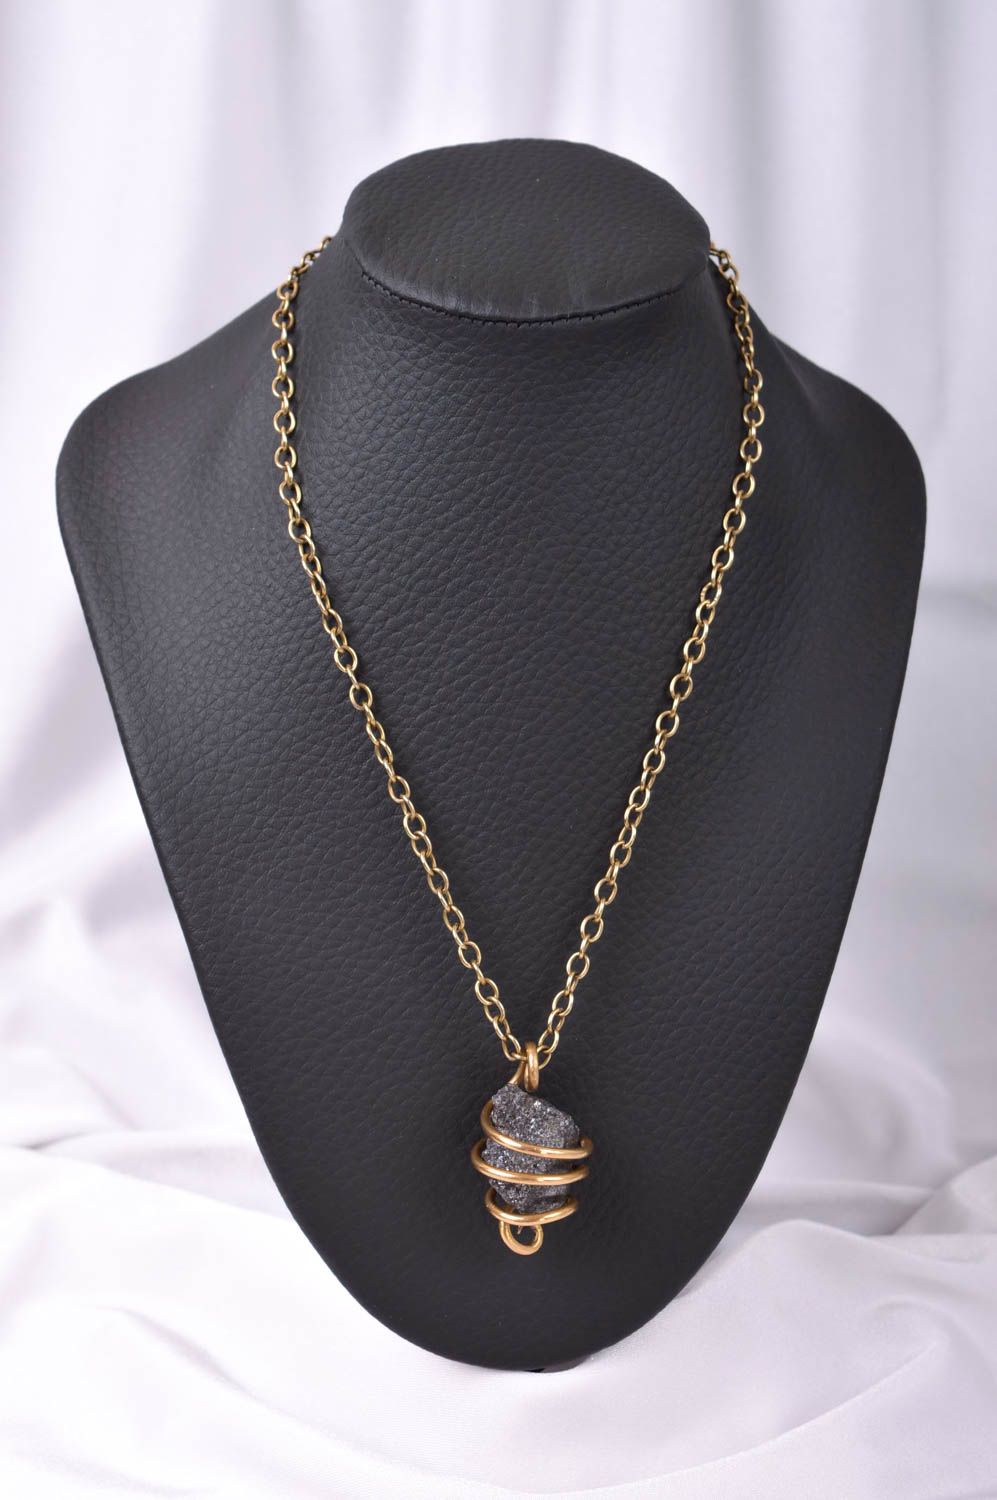 Handmade pendant unusual accessory metal jewelry gift ideas brass pendant photo 2